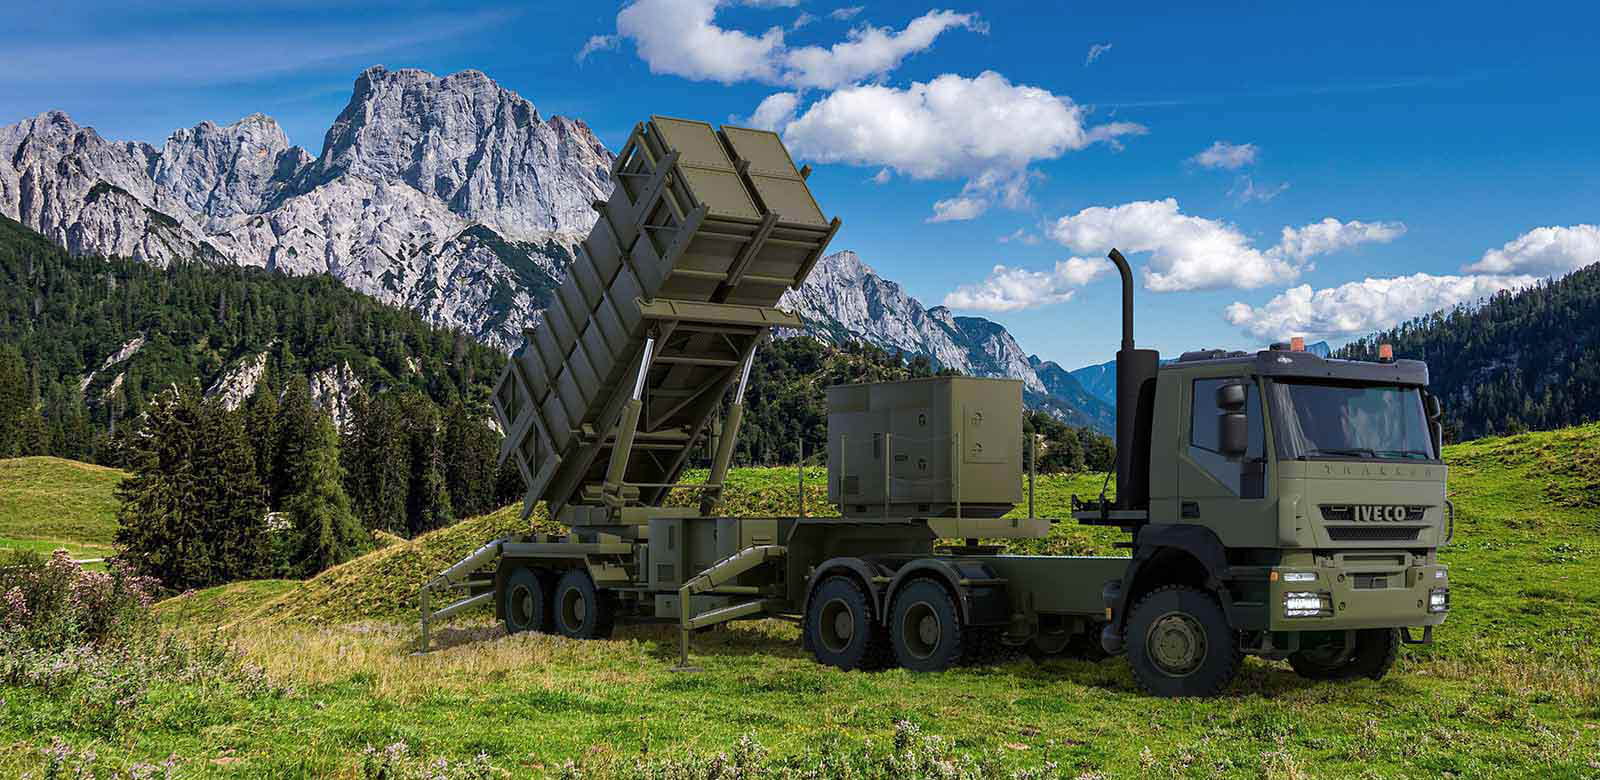 A rendering of the Patriot launcher in Switzerland.